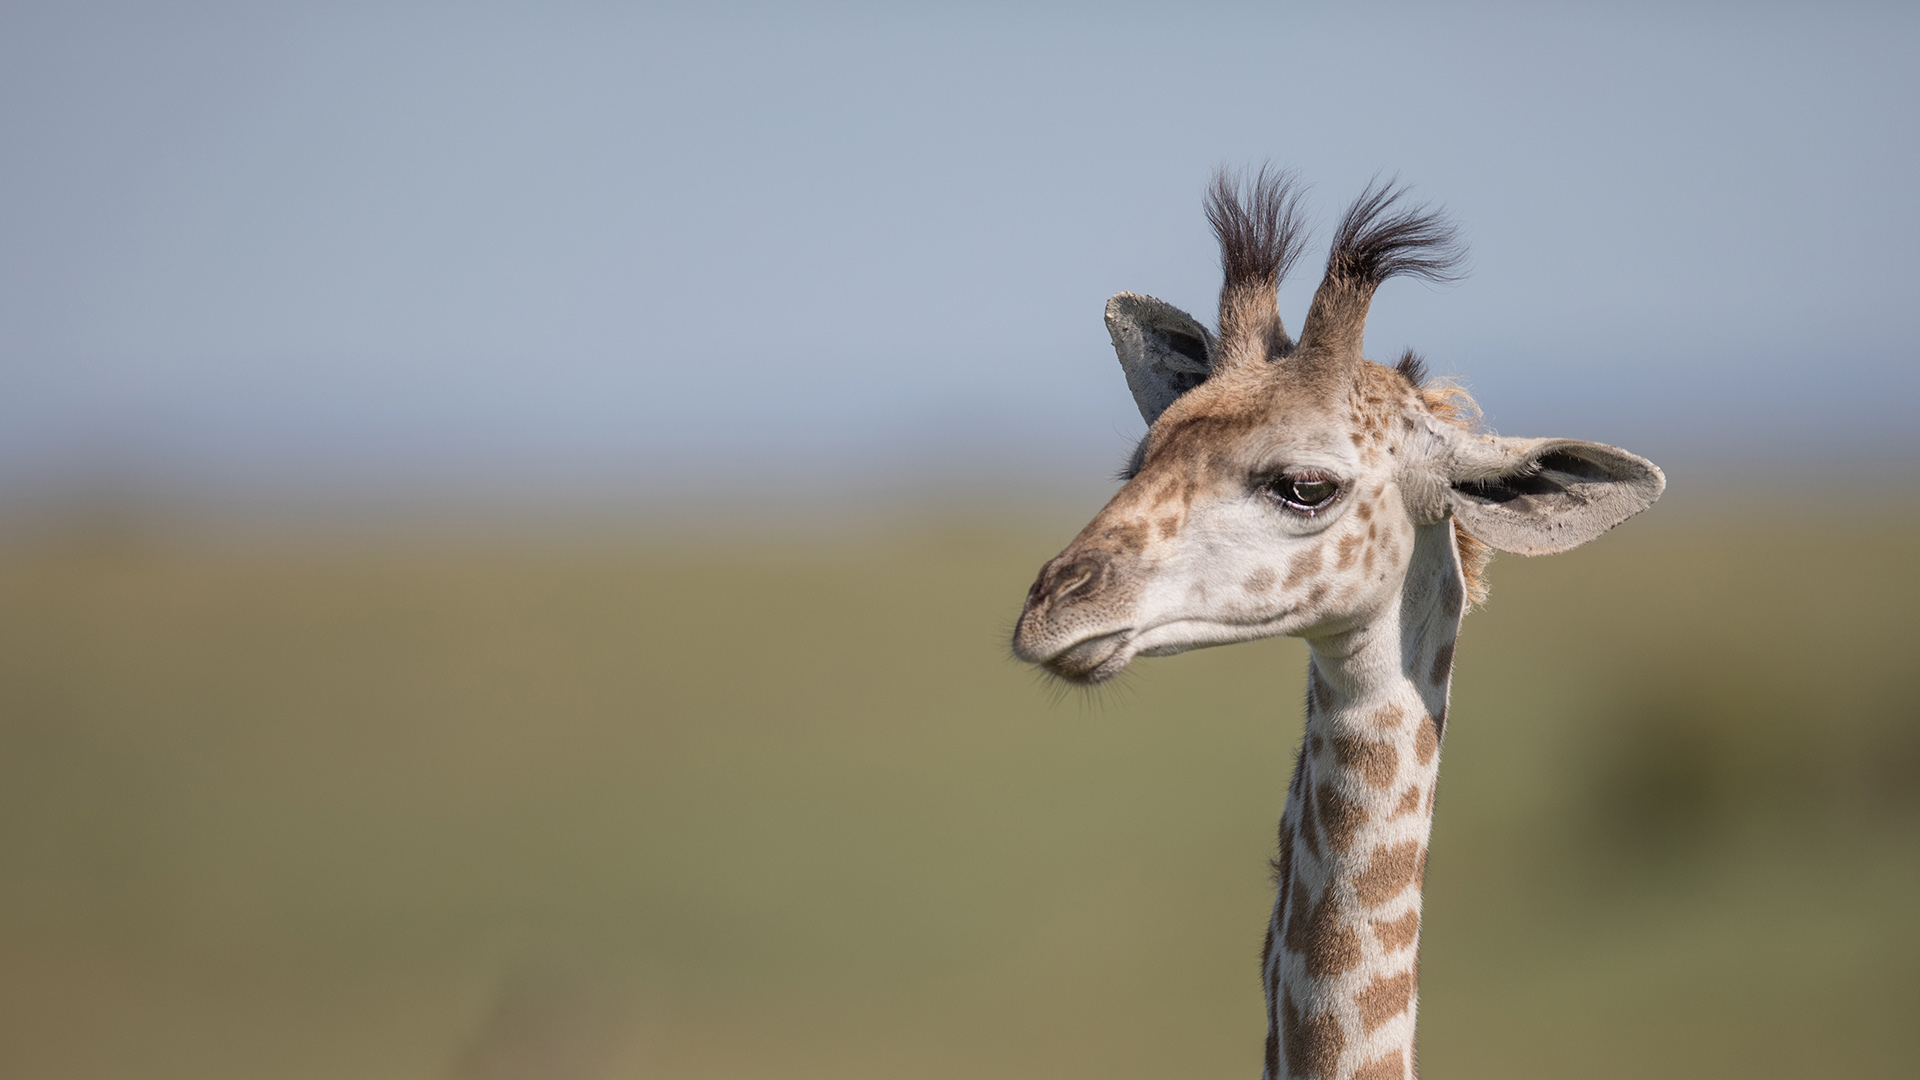 A close-up image of a wild giraffe's head